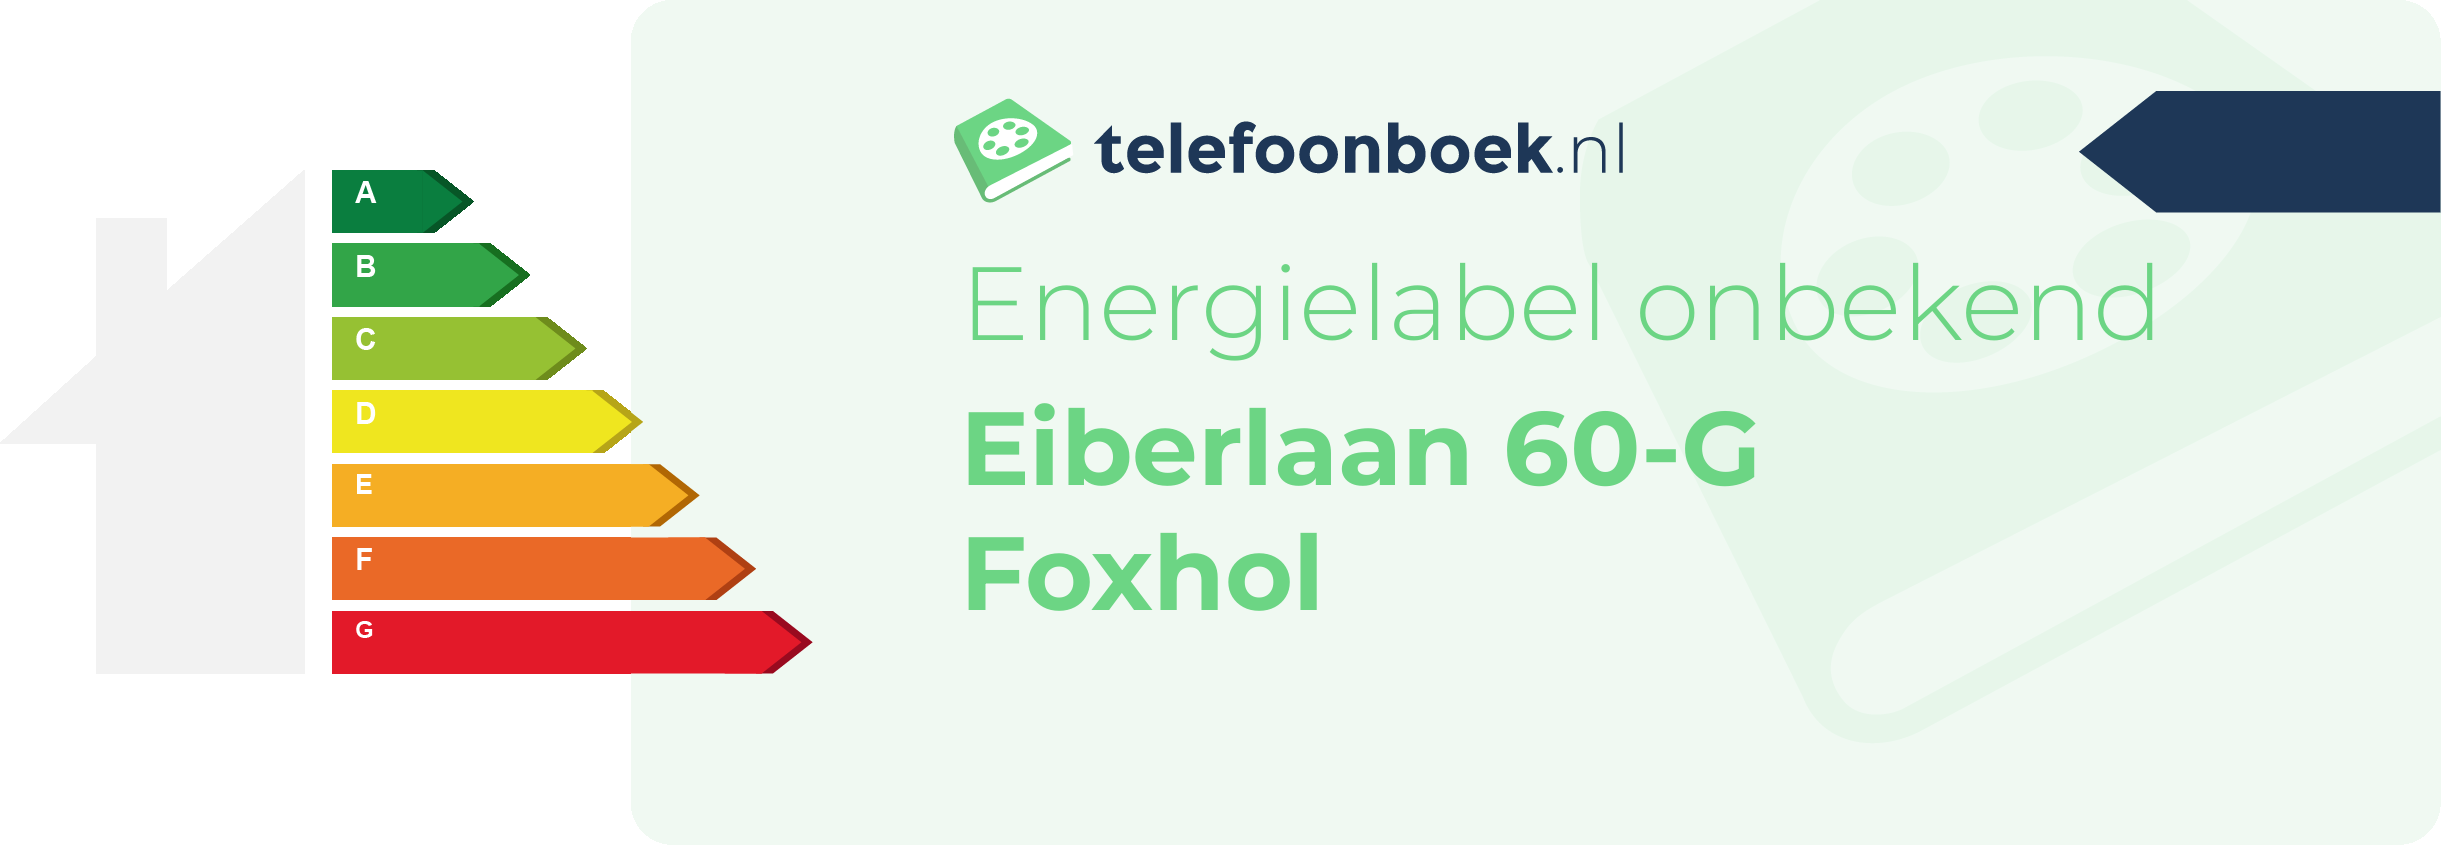 Energielabel Eiberlaan 60-G Foxhol